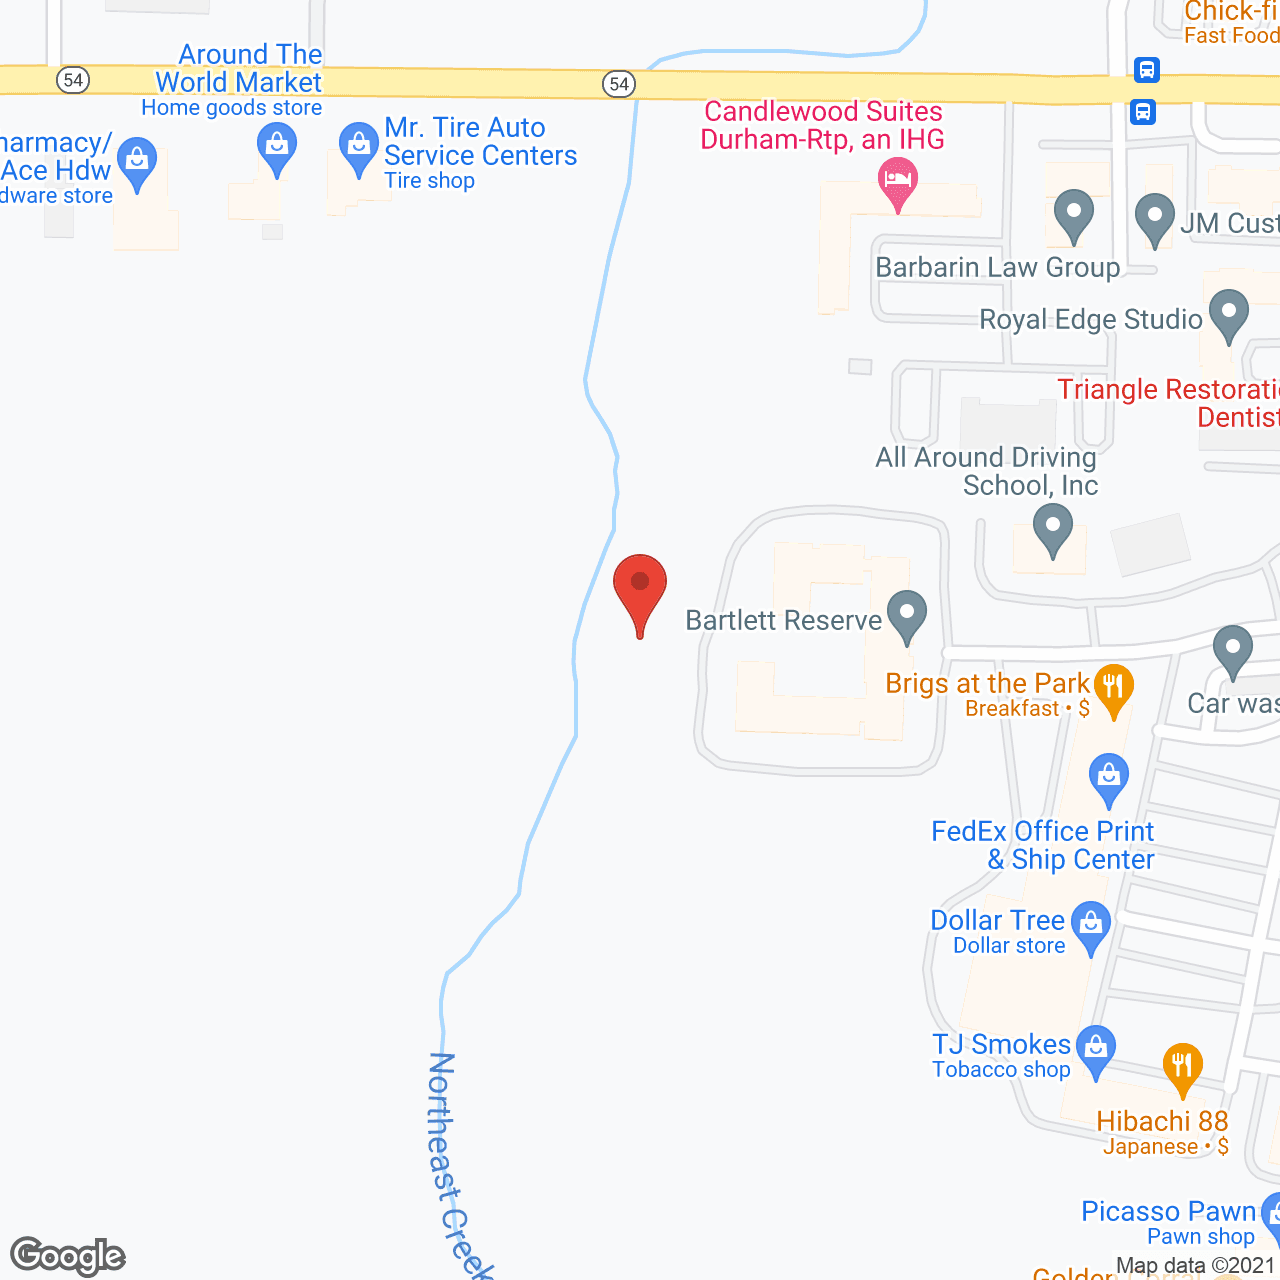 Bartlett Reserve in google map